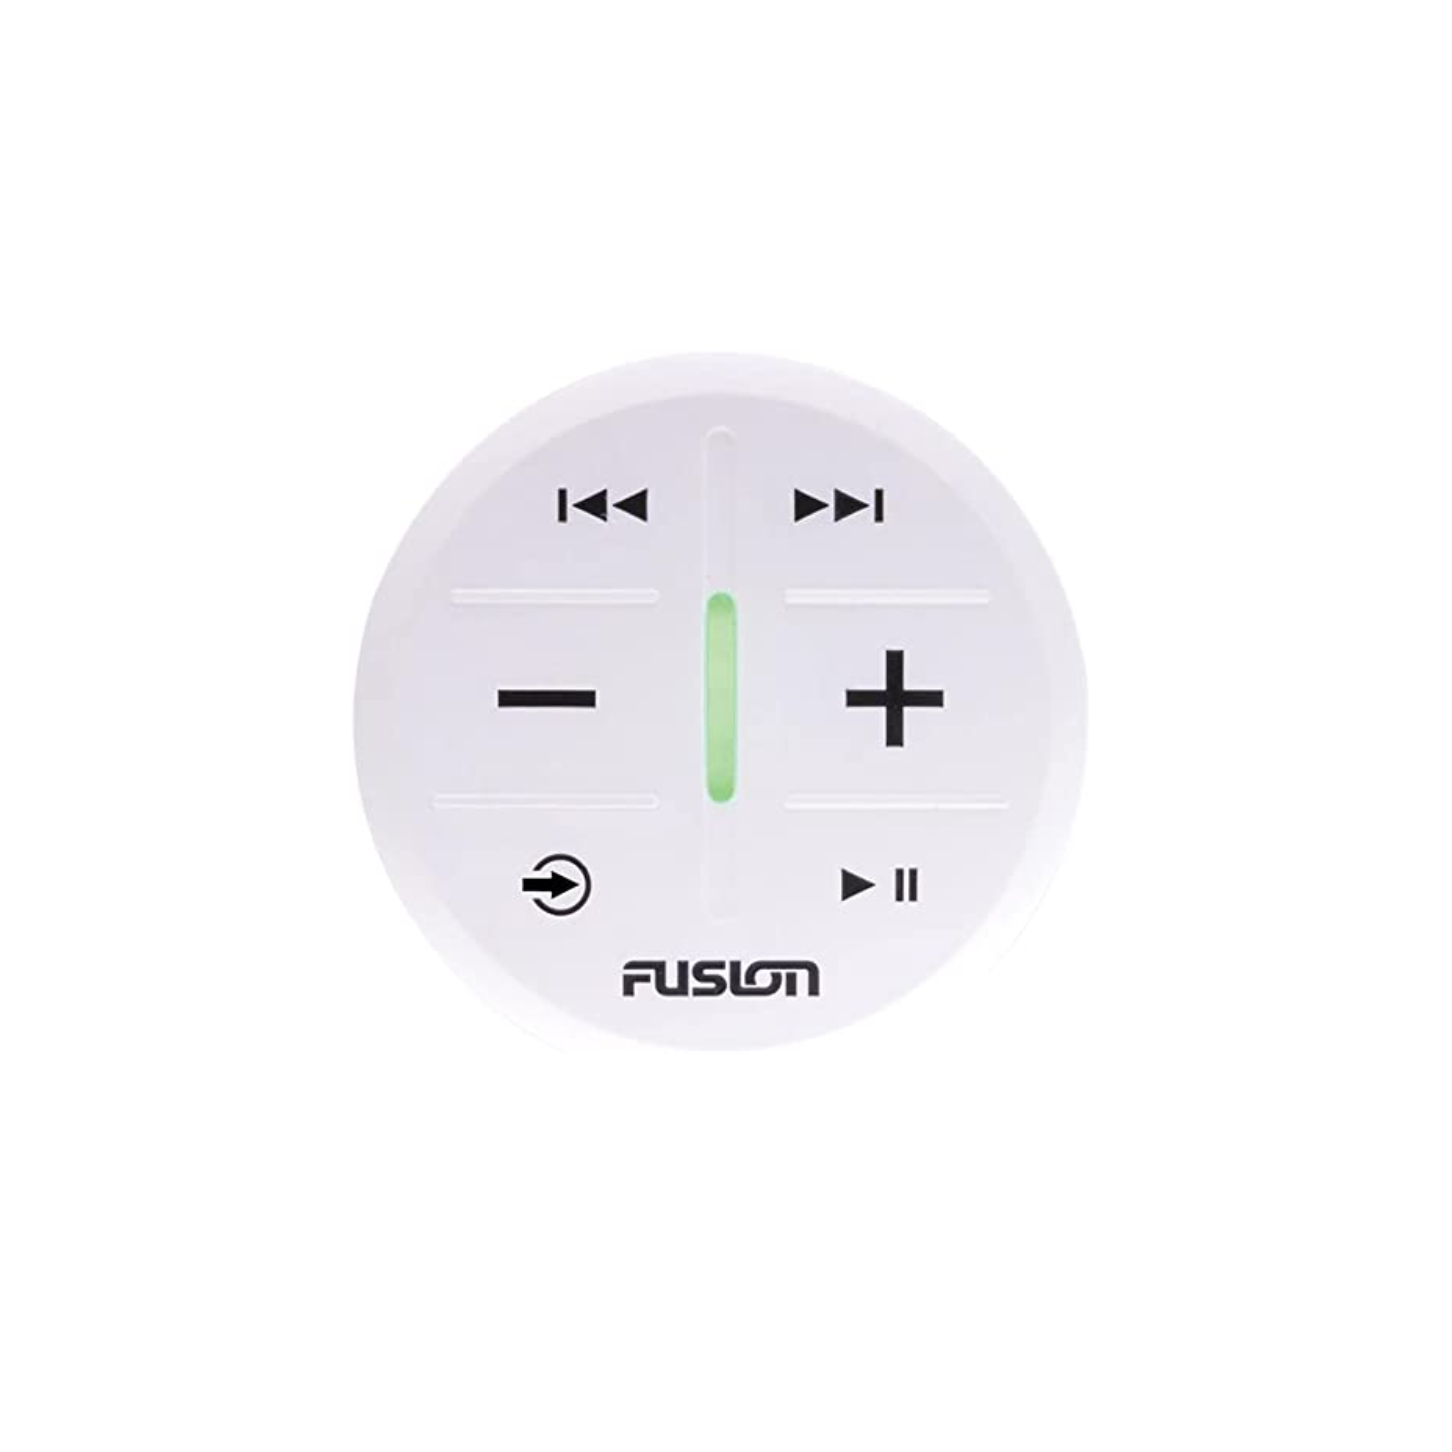 Fusion ARX70W, ARX Wireless Remote Control